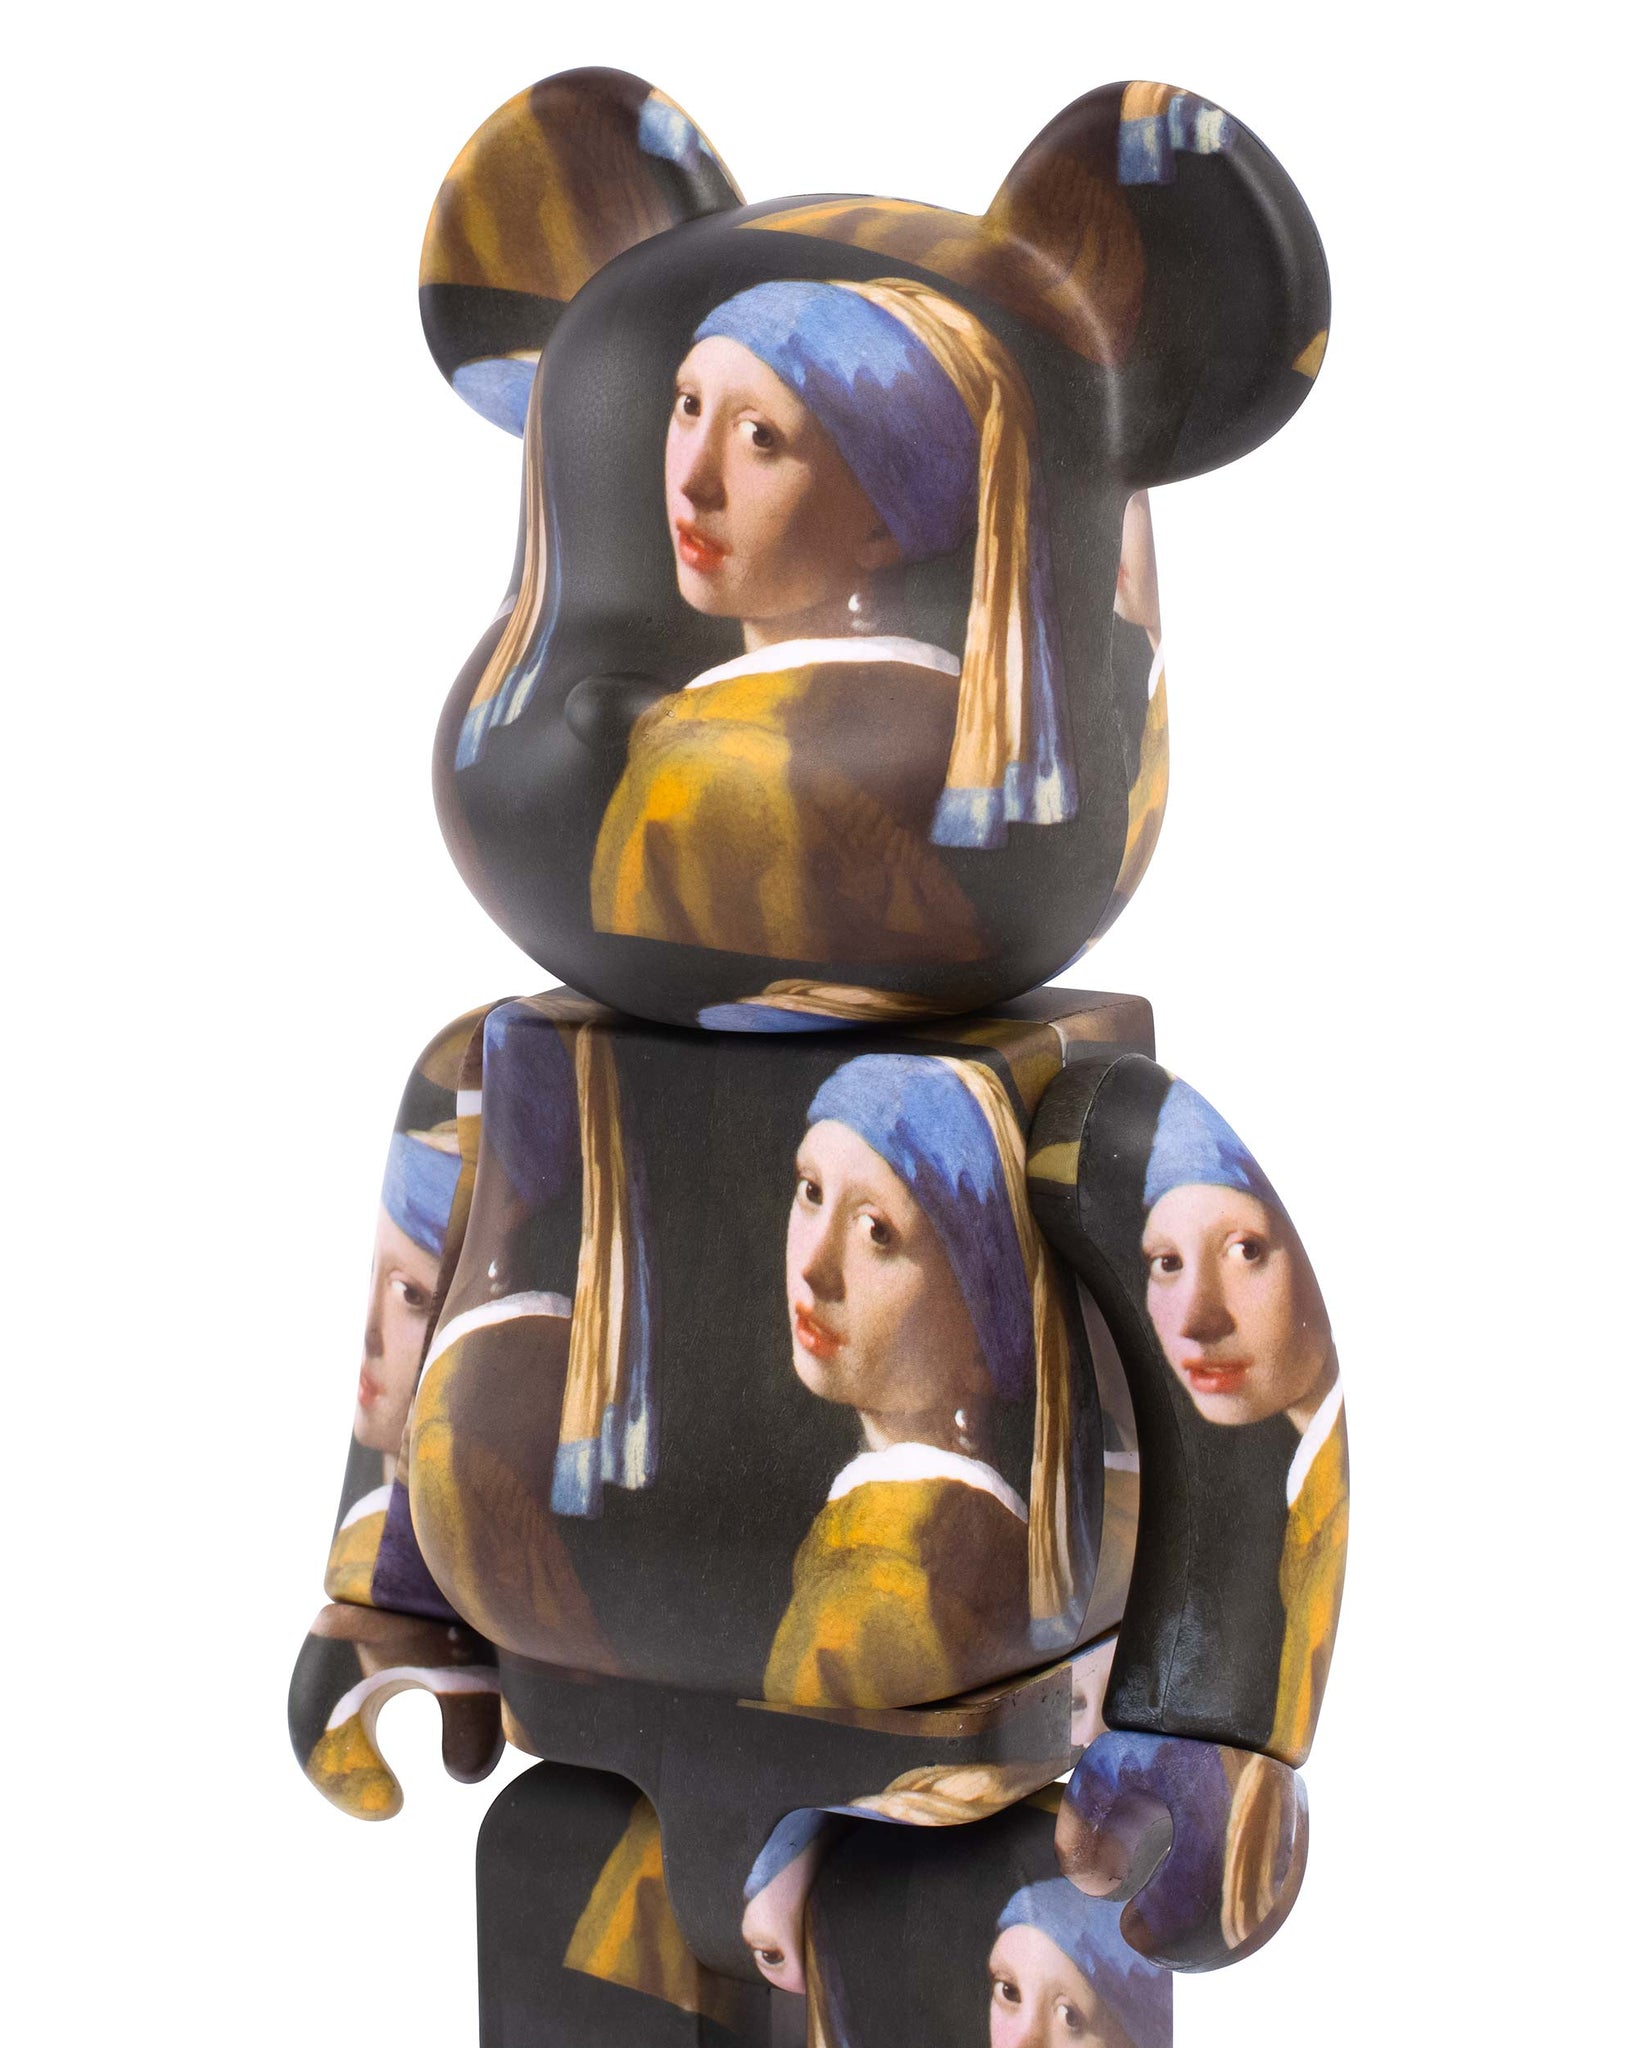 Medicom Toy Johannes Vermeer (Girl with a Pearl Earring) 100% + 400% B